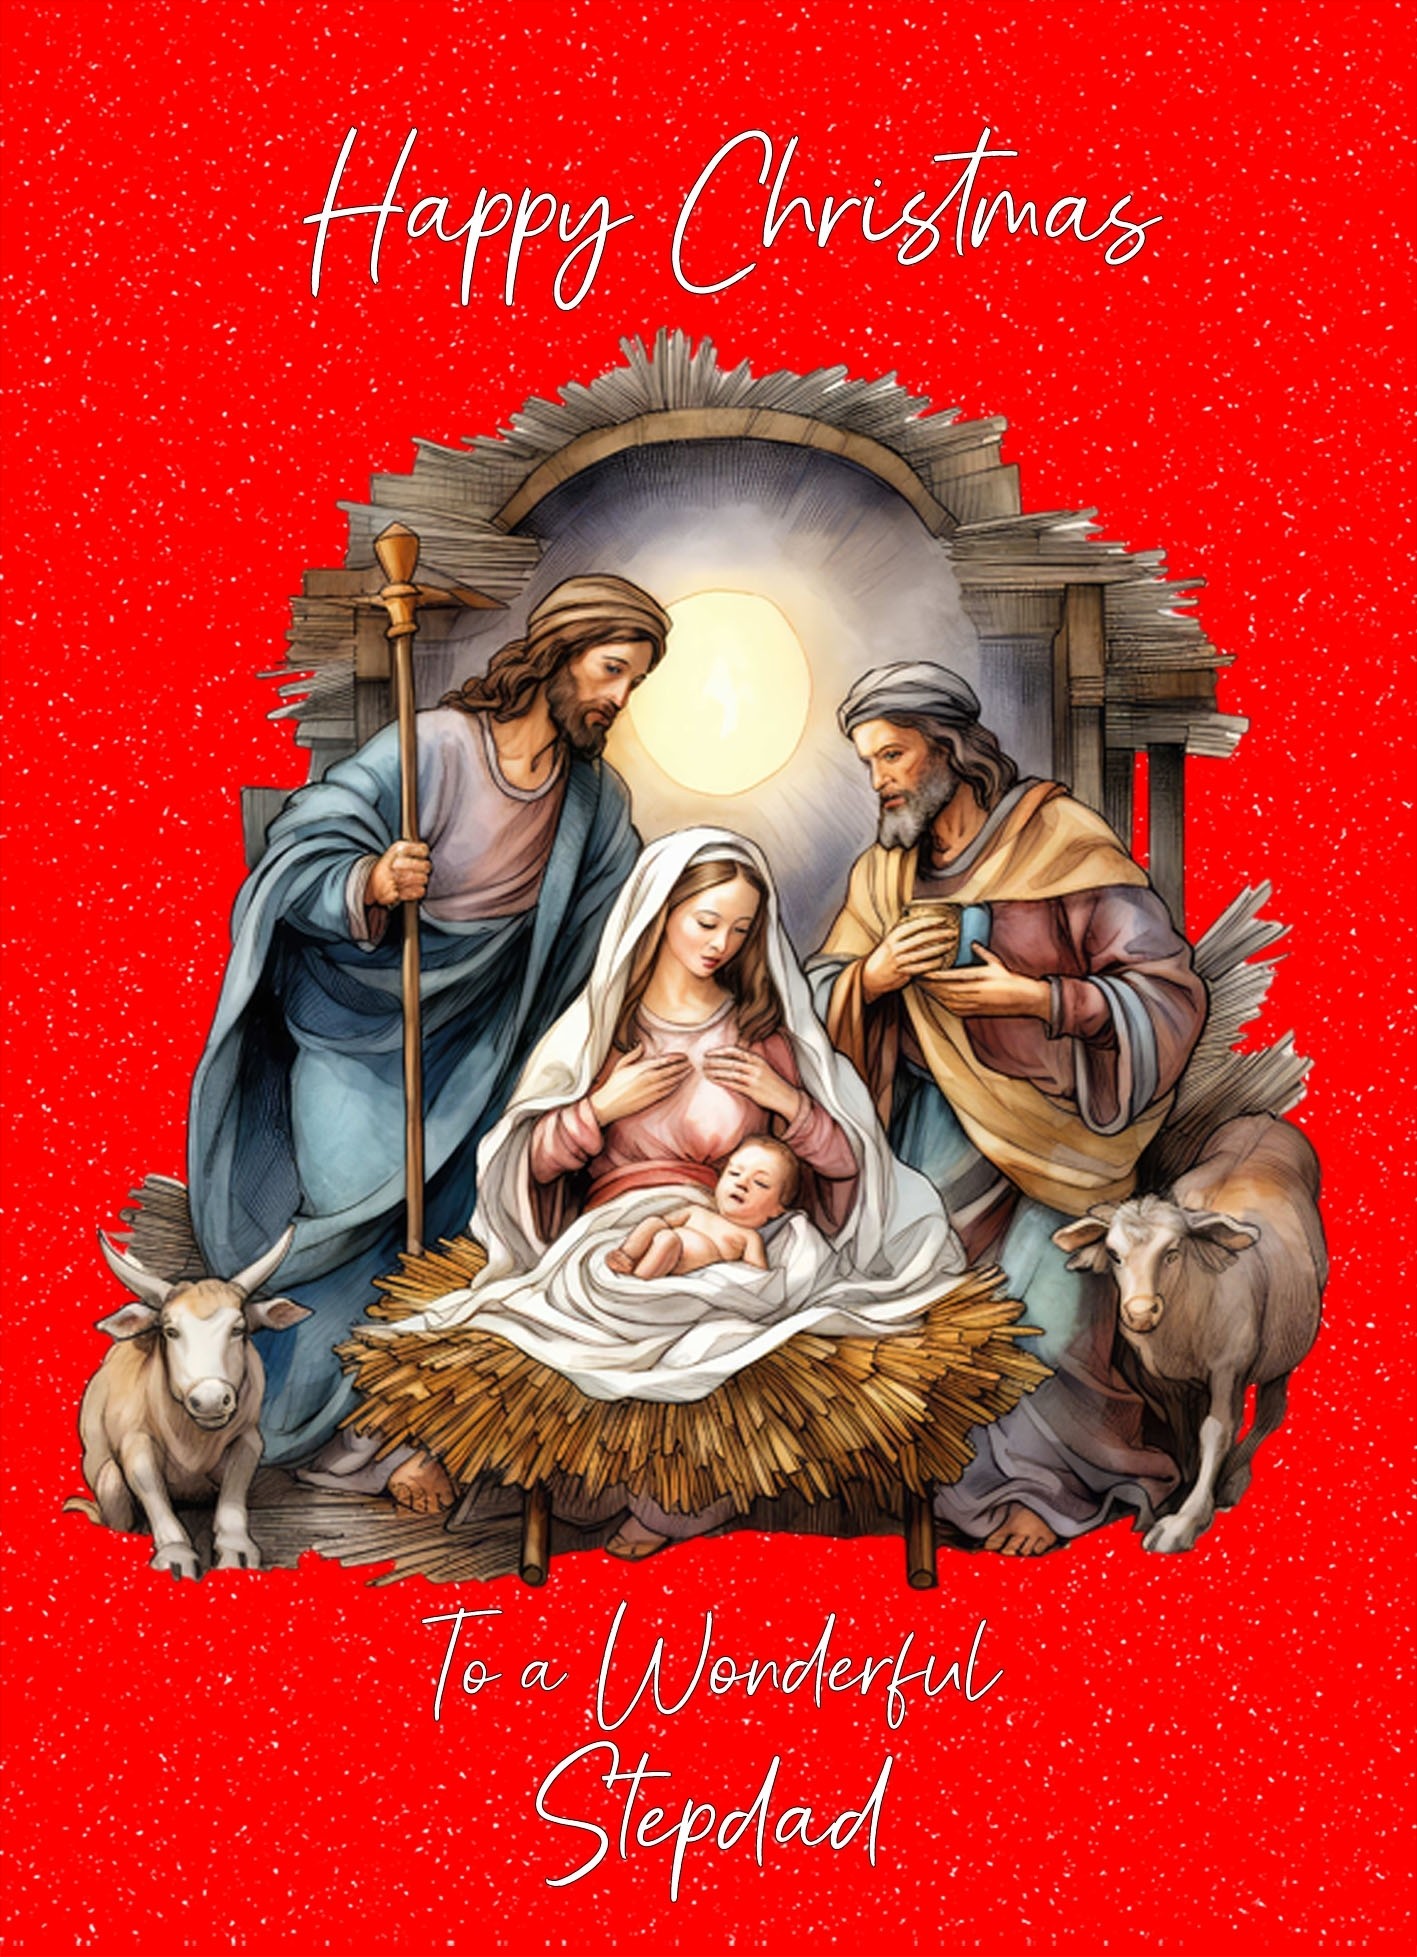 Christmas Card For Stepdad (Nativity Scene)